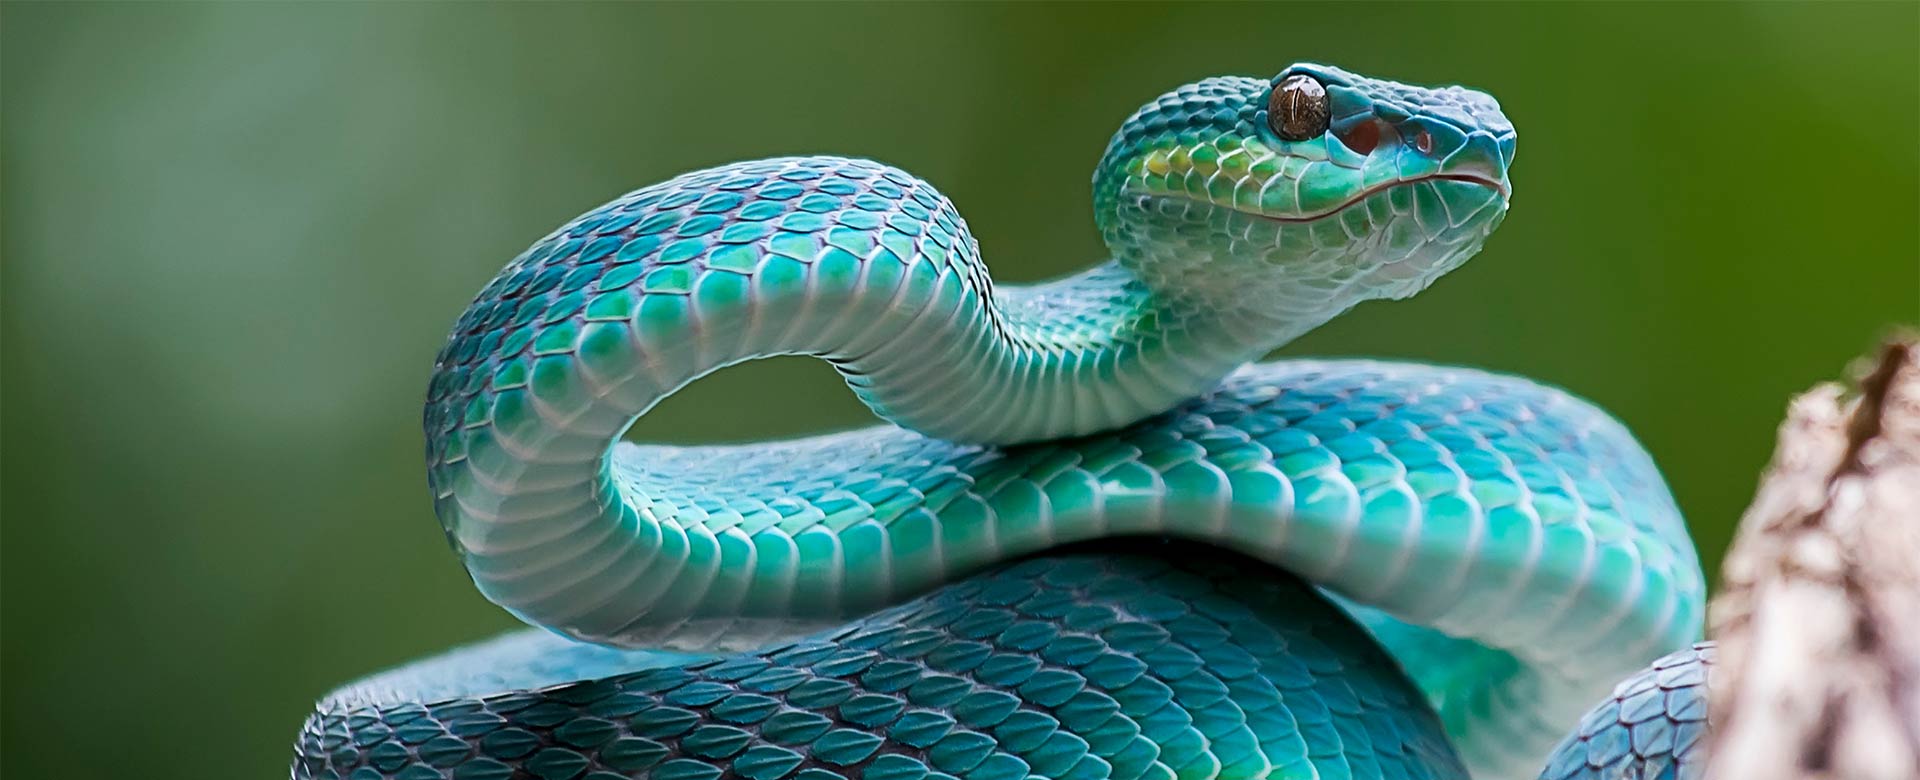 Snakes: Nature’s Misunderstood Heroes photo